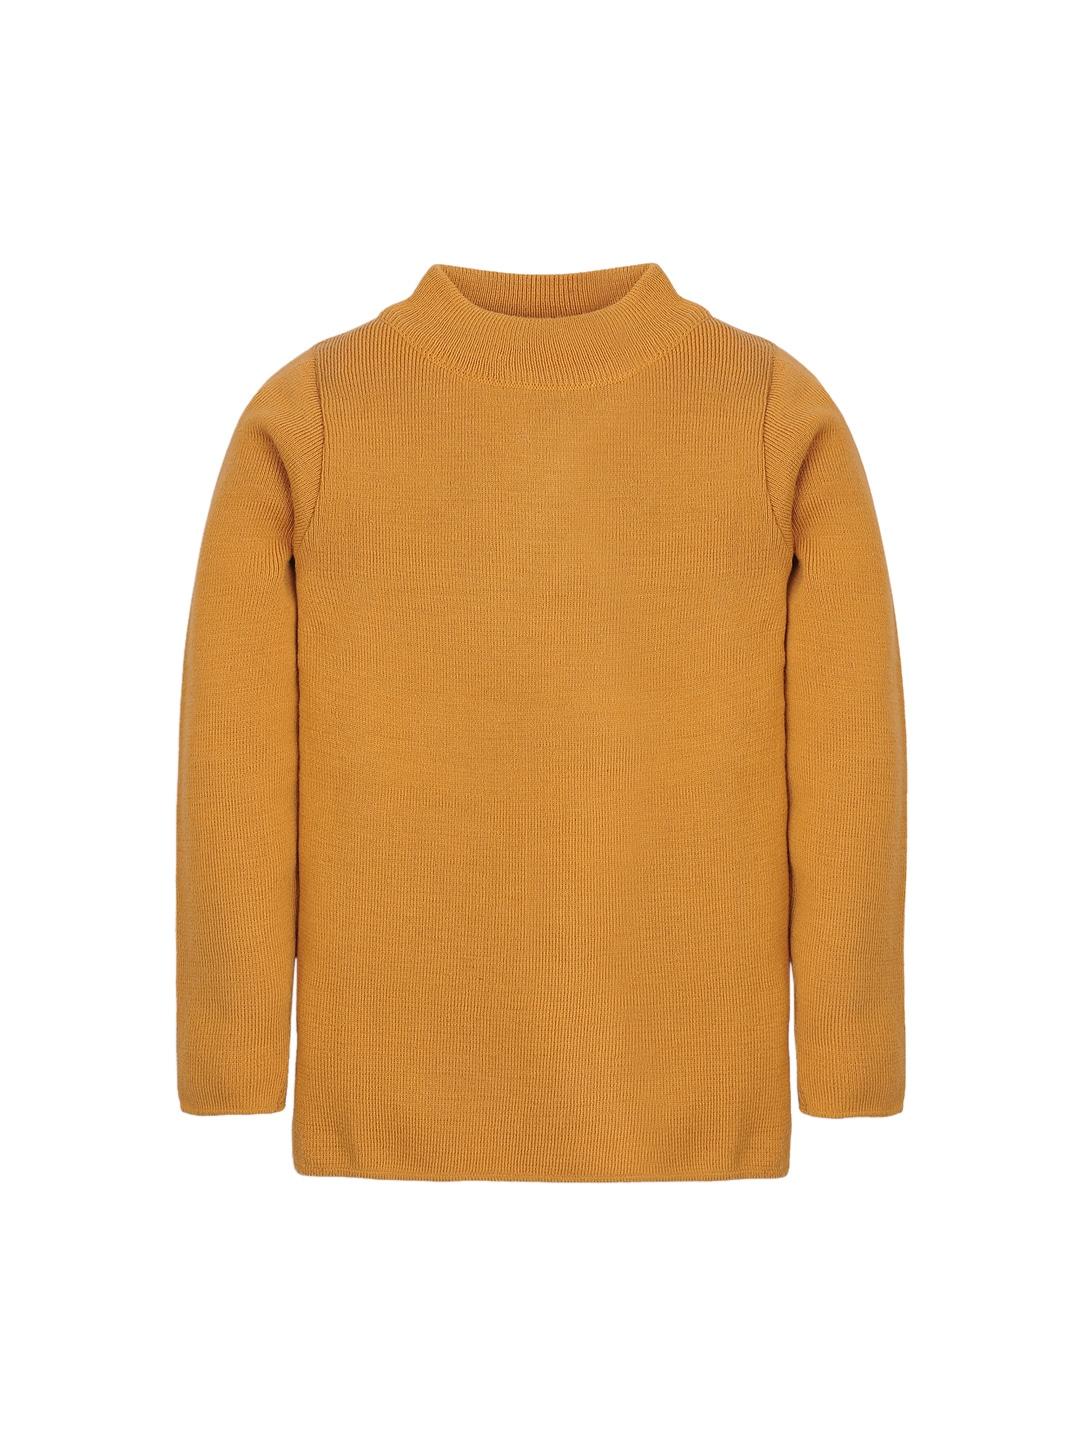 rvk-unisex-mustard-yellow-solid-sweater